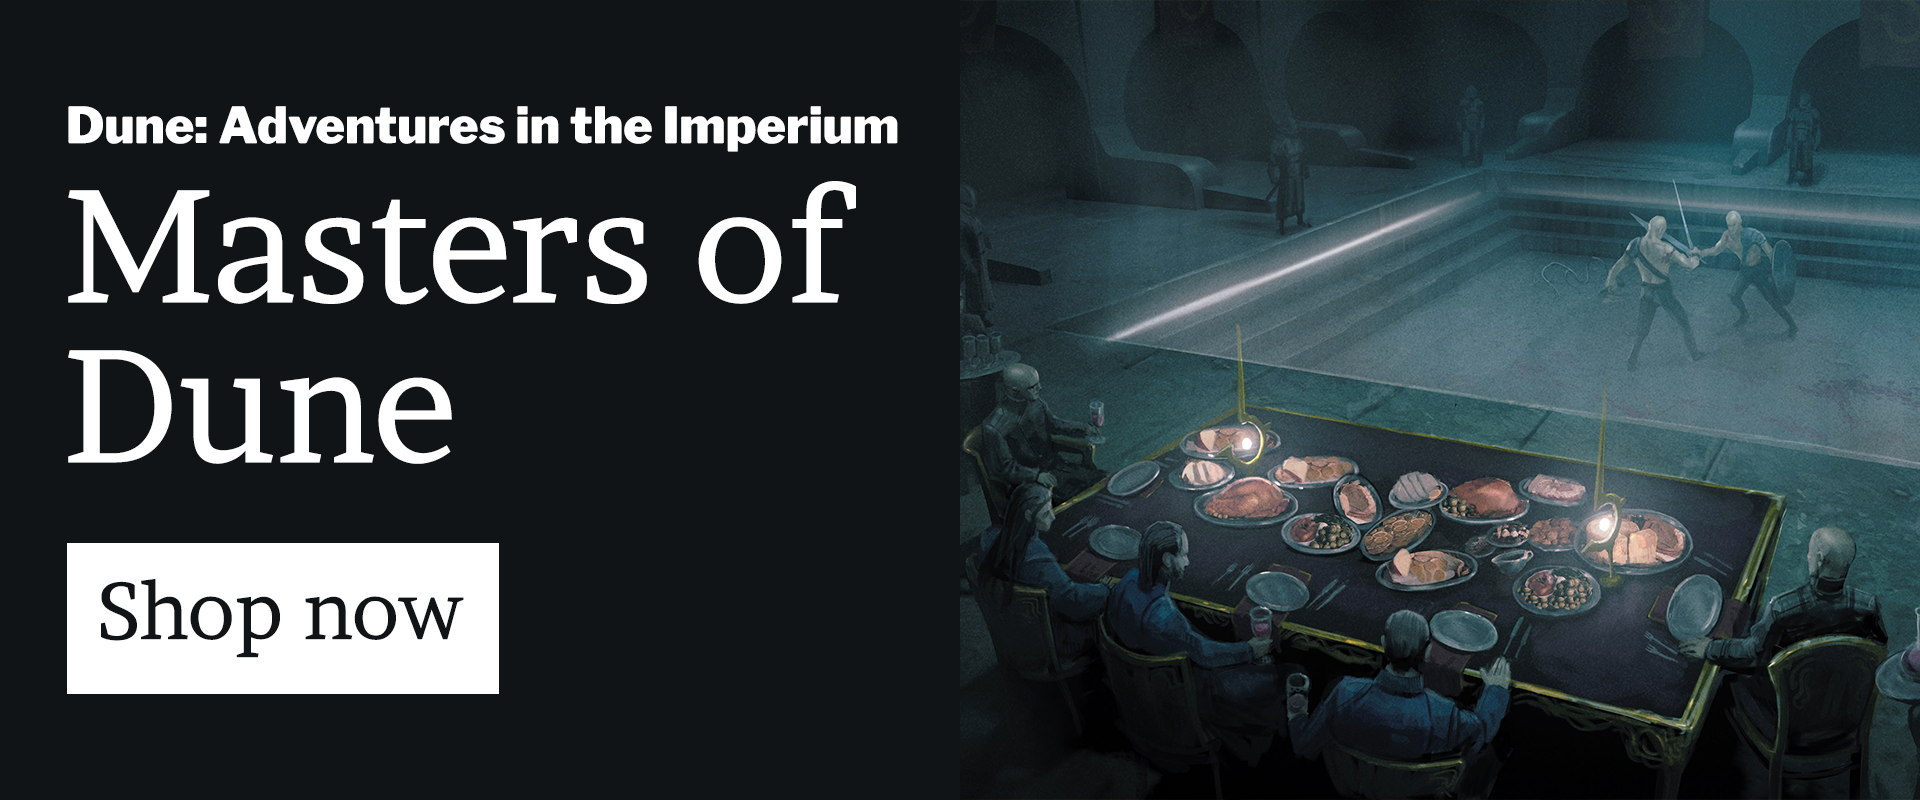 Dune: Adventures in the Imperium Masters of Dune Banner Image